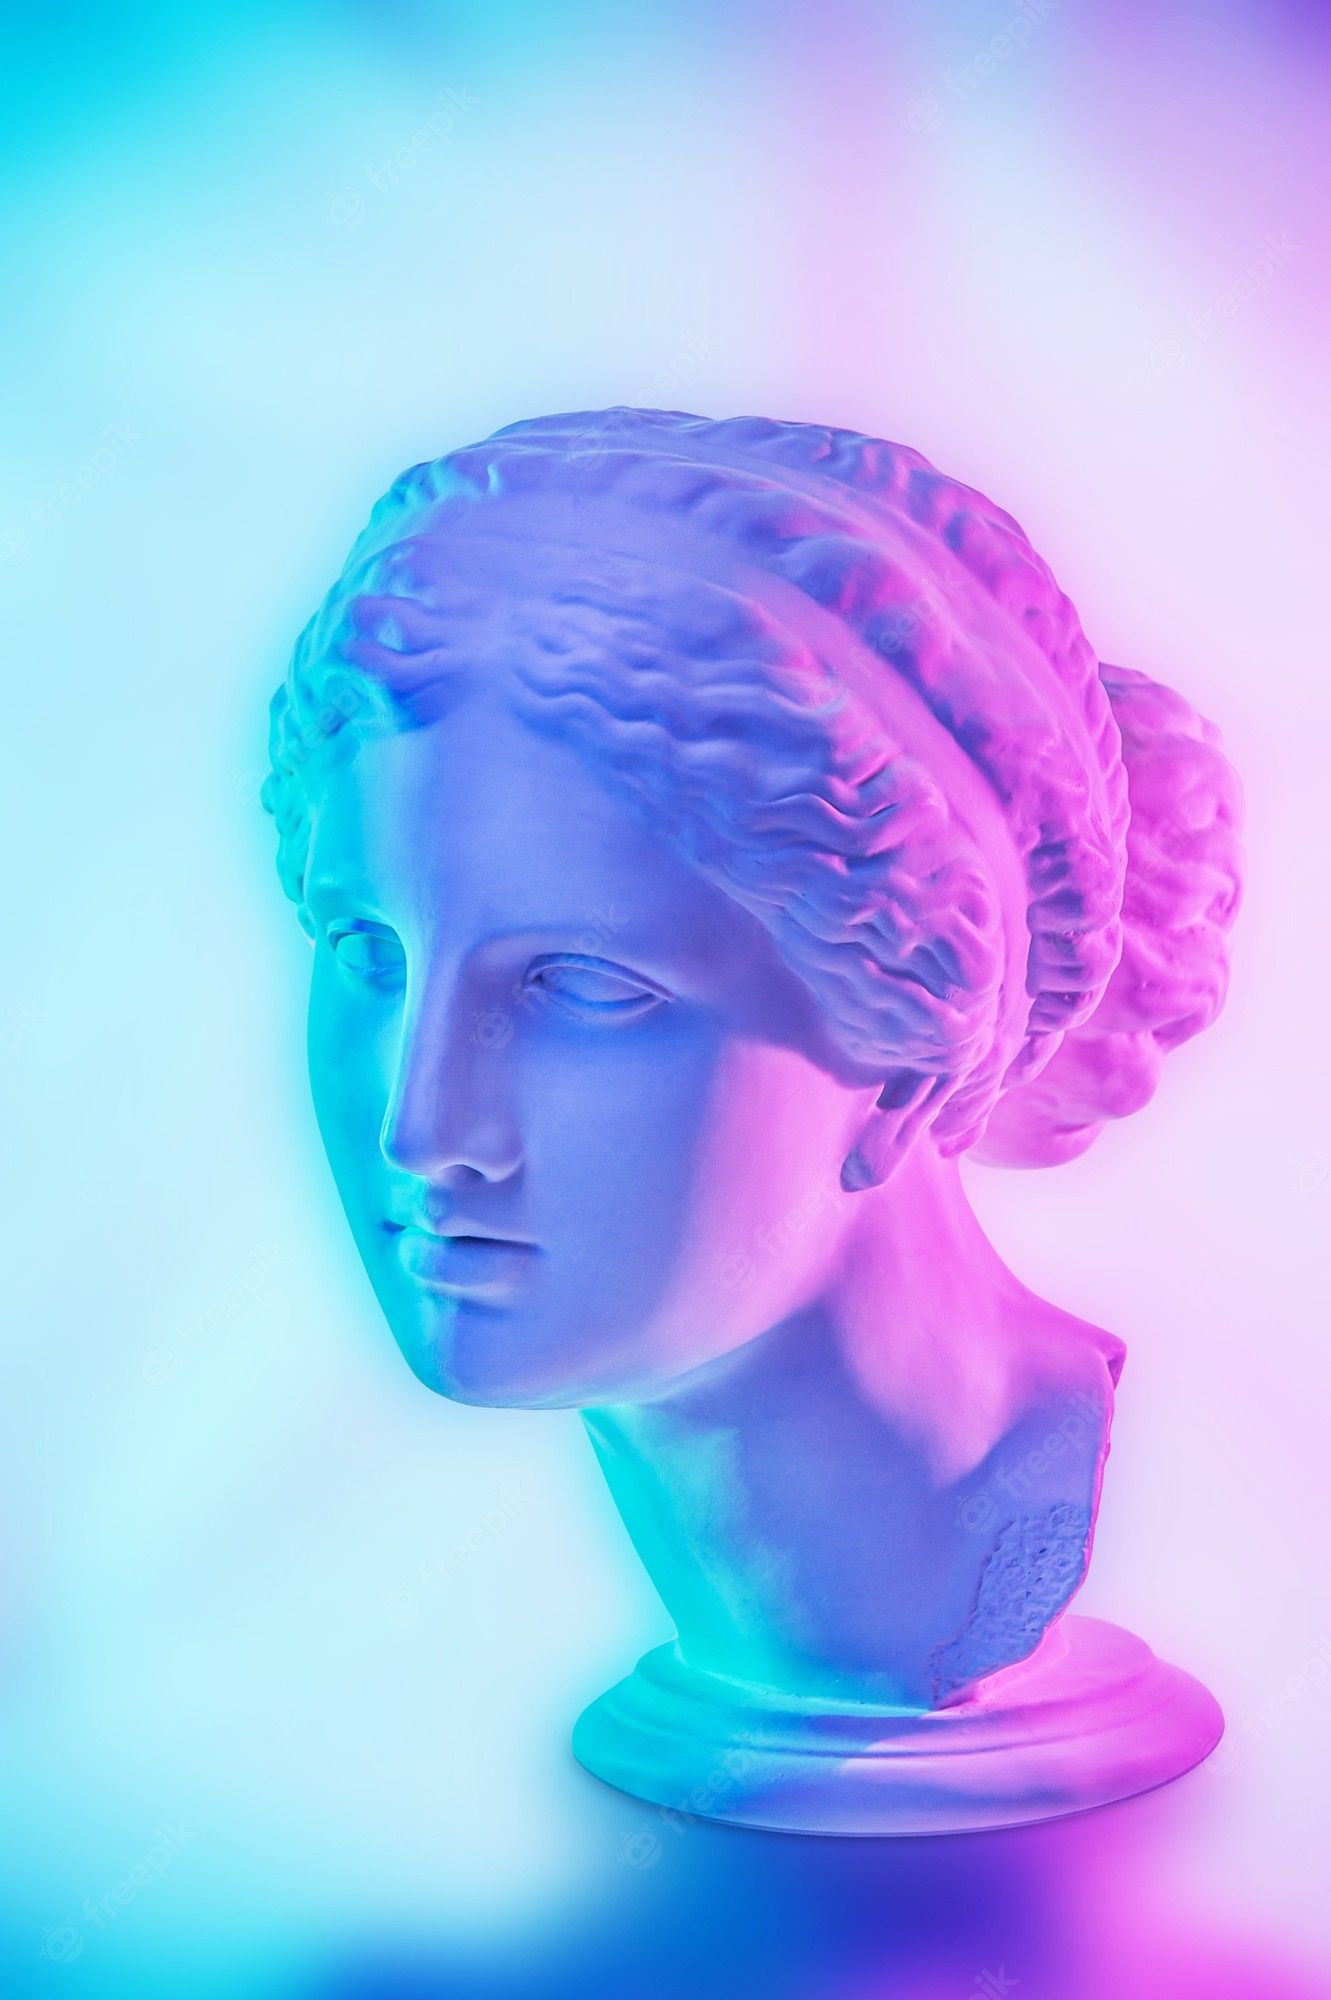 Premium Photo. Statue of venus de milo. creative concept colorful neon image with ancient greek sculpture venus or aphrodite head. webpunk, vaporwave and surreal art style. pink and blue duotone effects